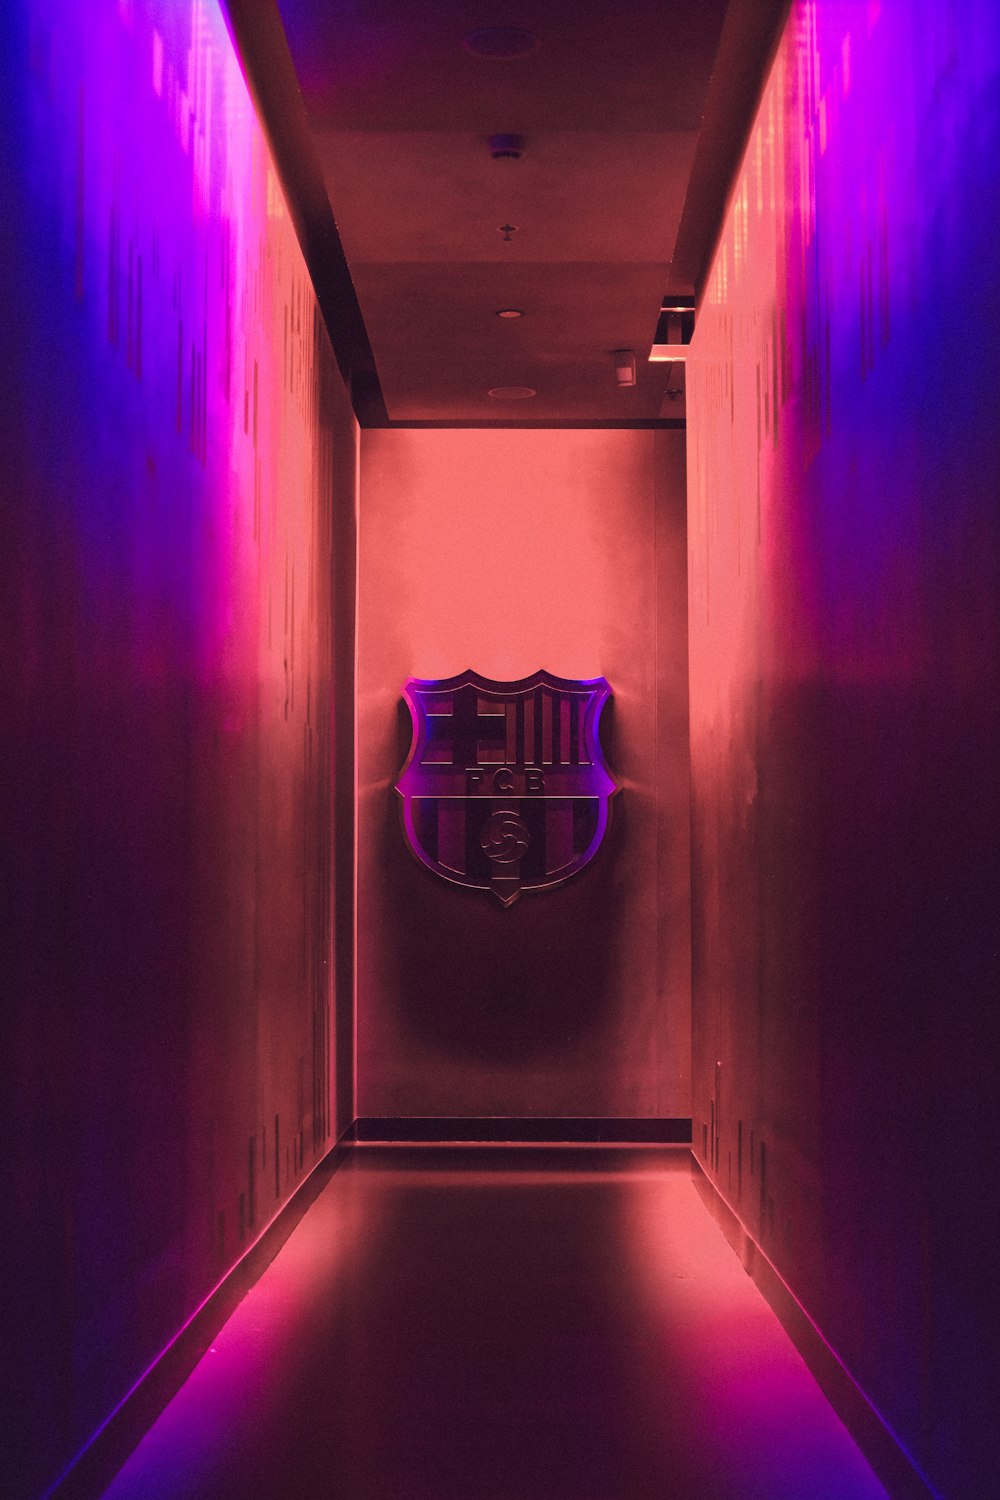 emblema de futebol na parede